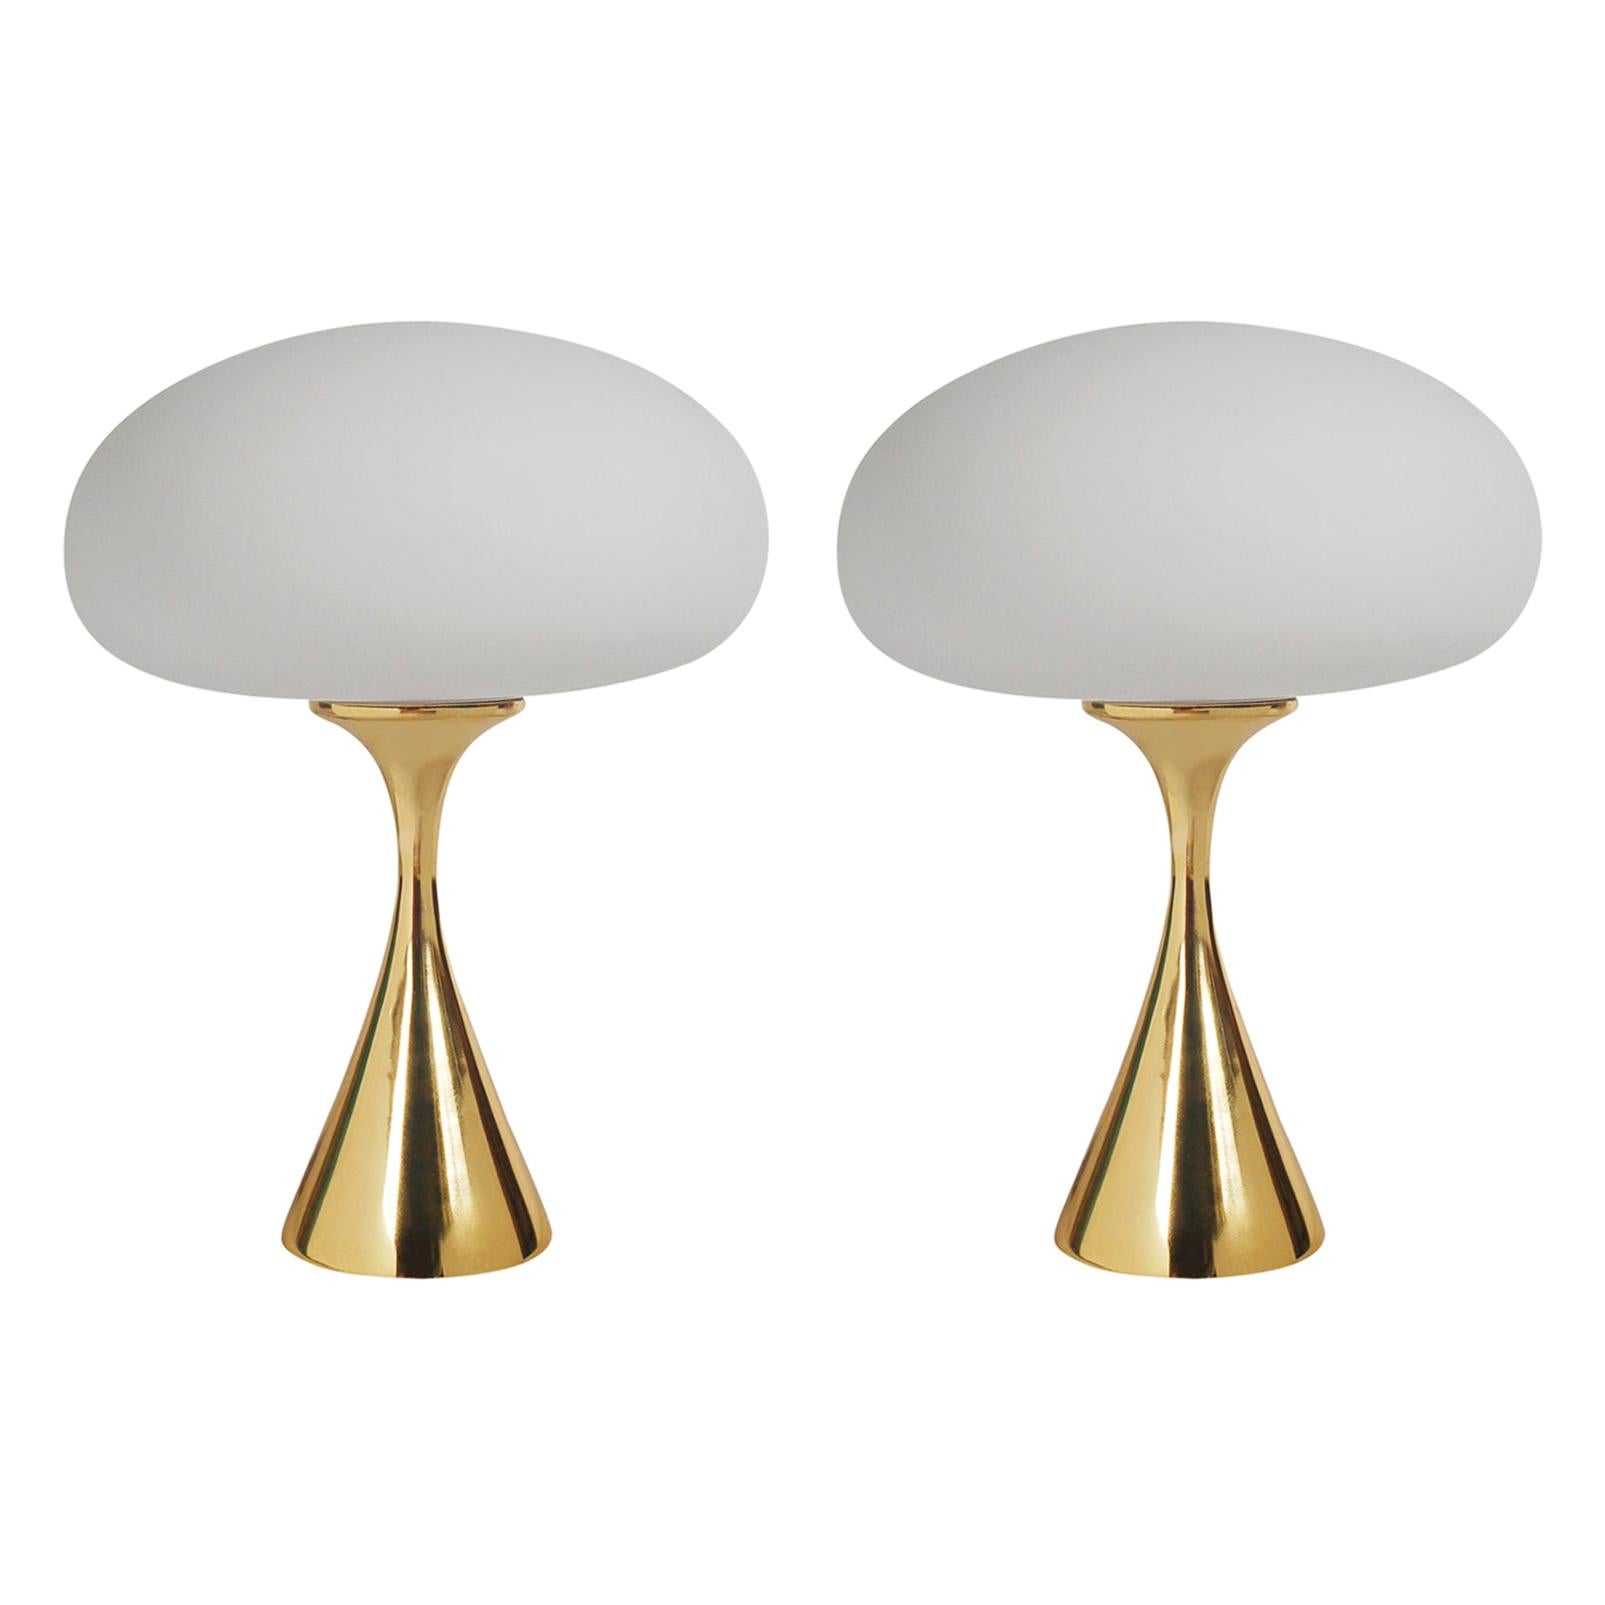 Pair of Mid-Century Modern Laurel Mushroom Table Lamps in Brass